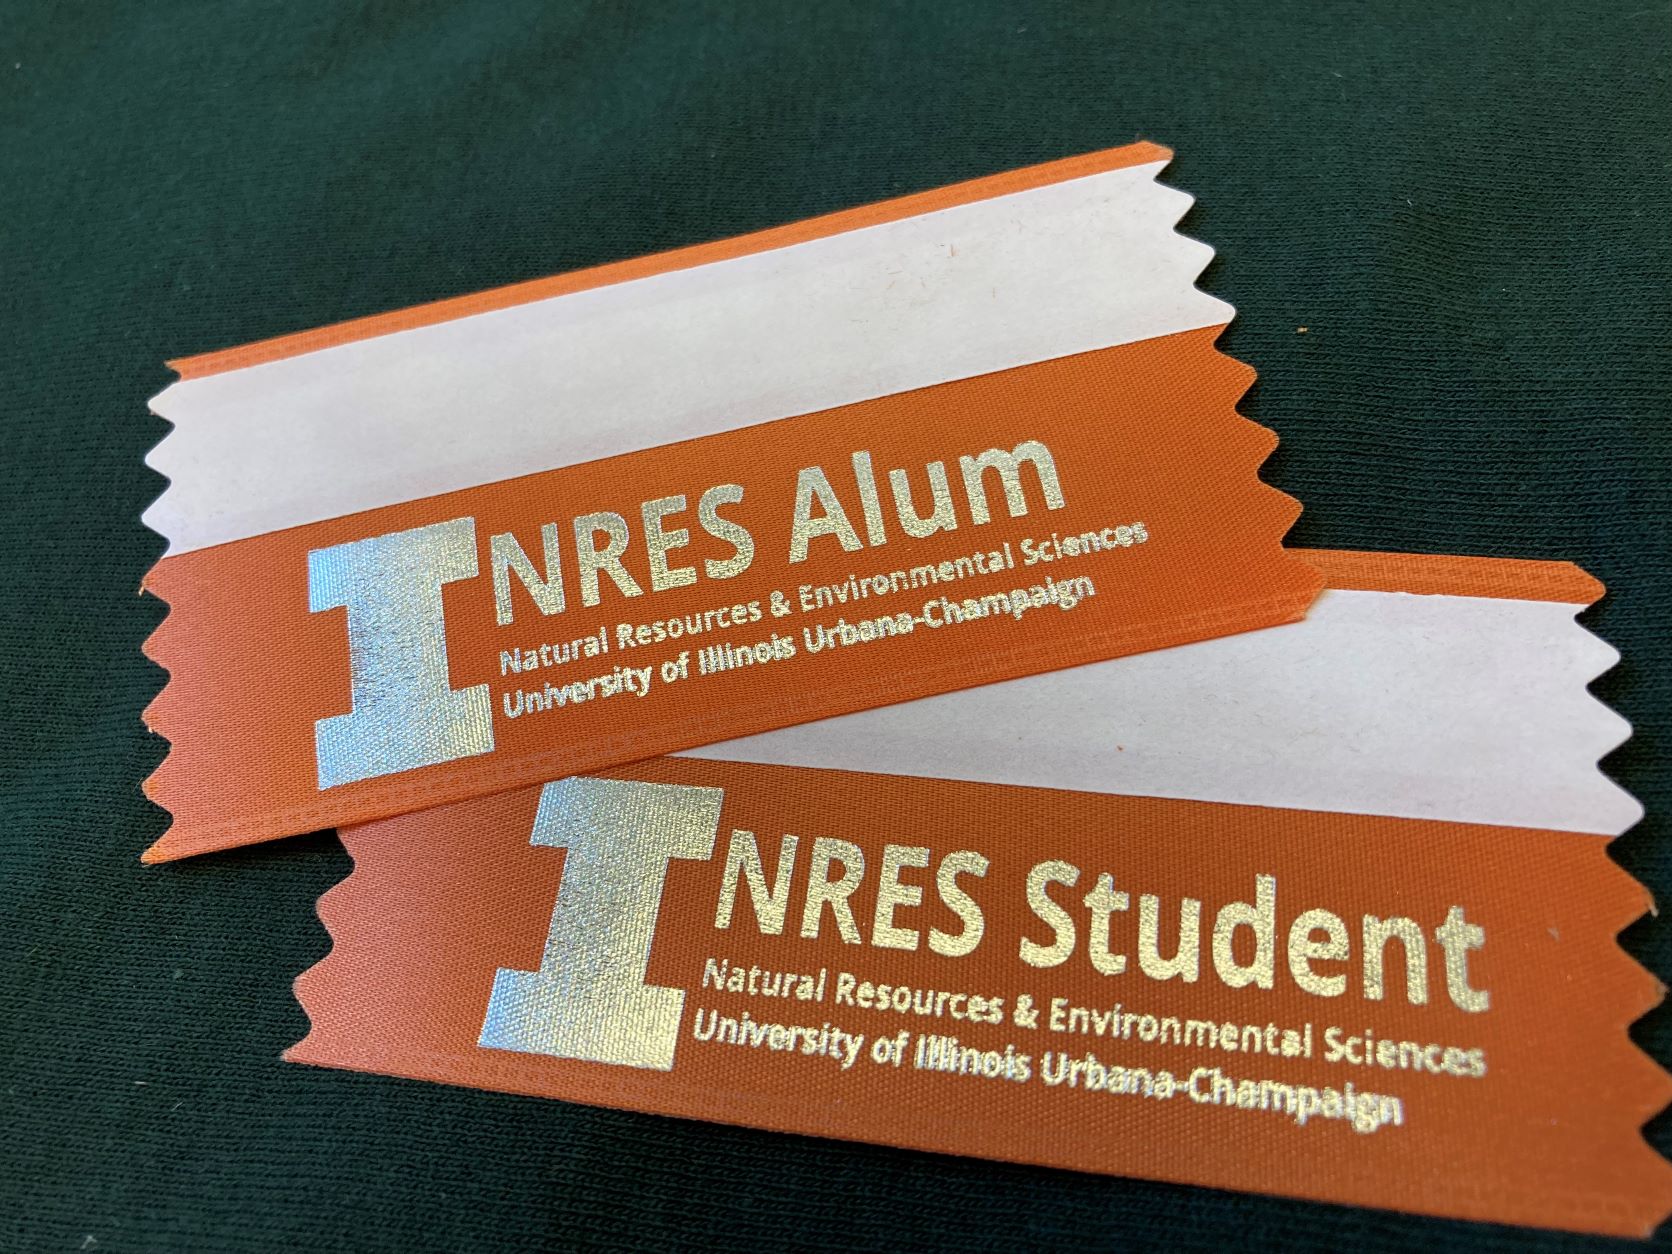 Image of name tag ribbons say NRES Alum or NRES Student